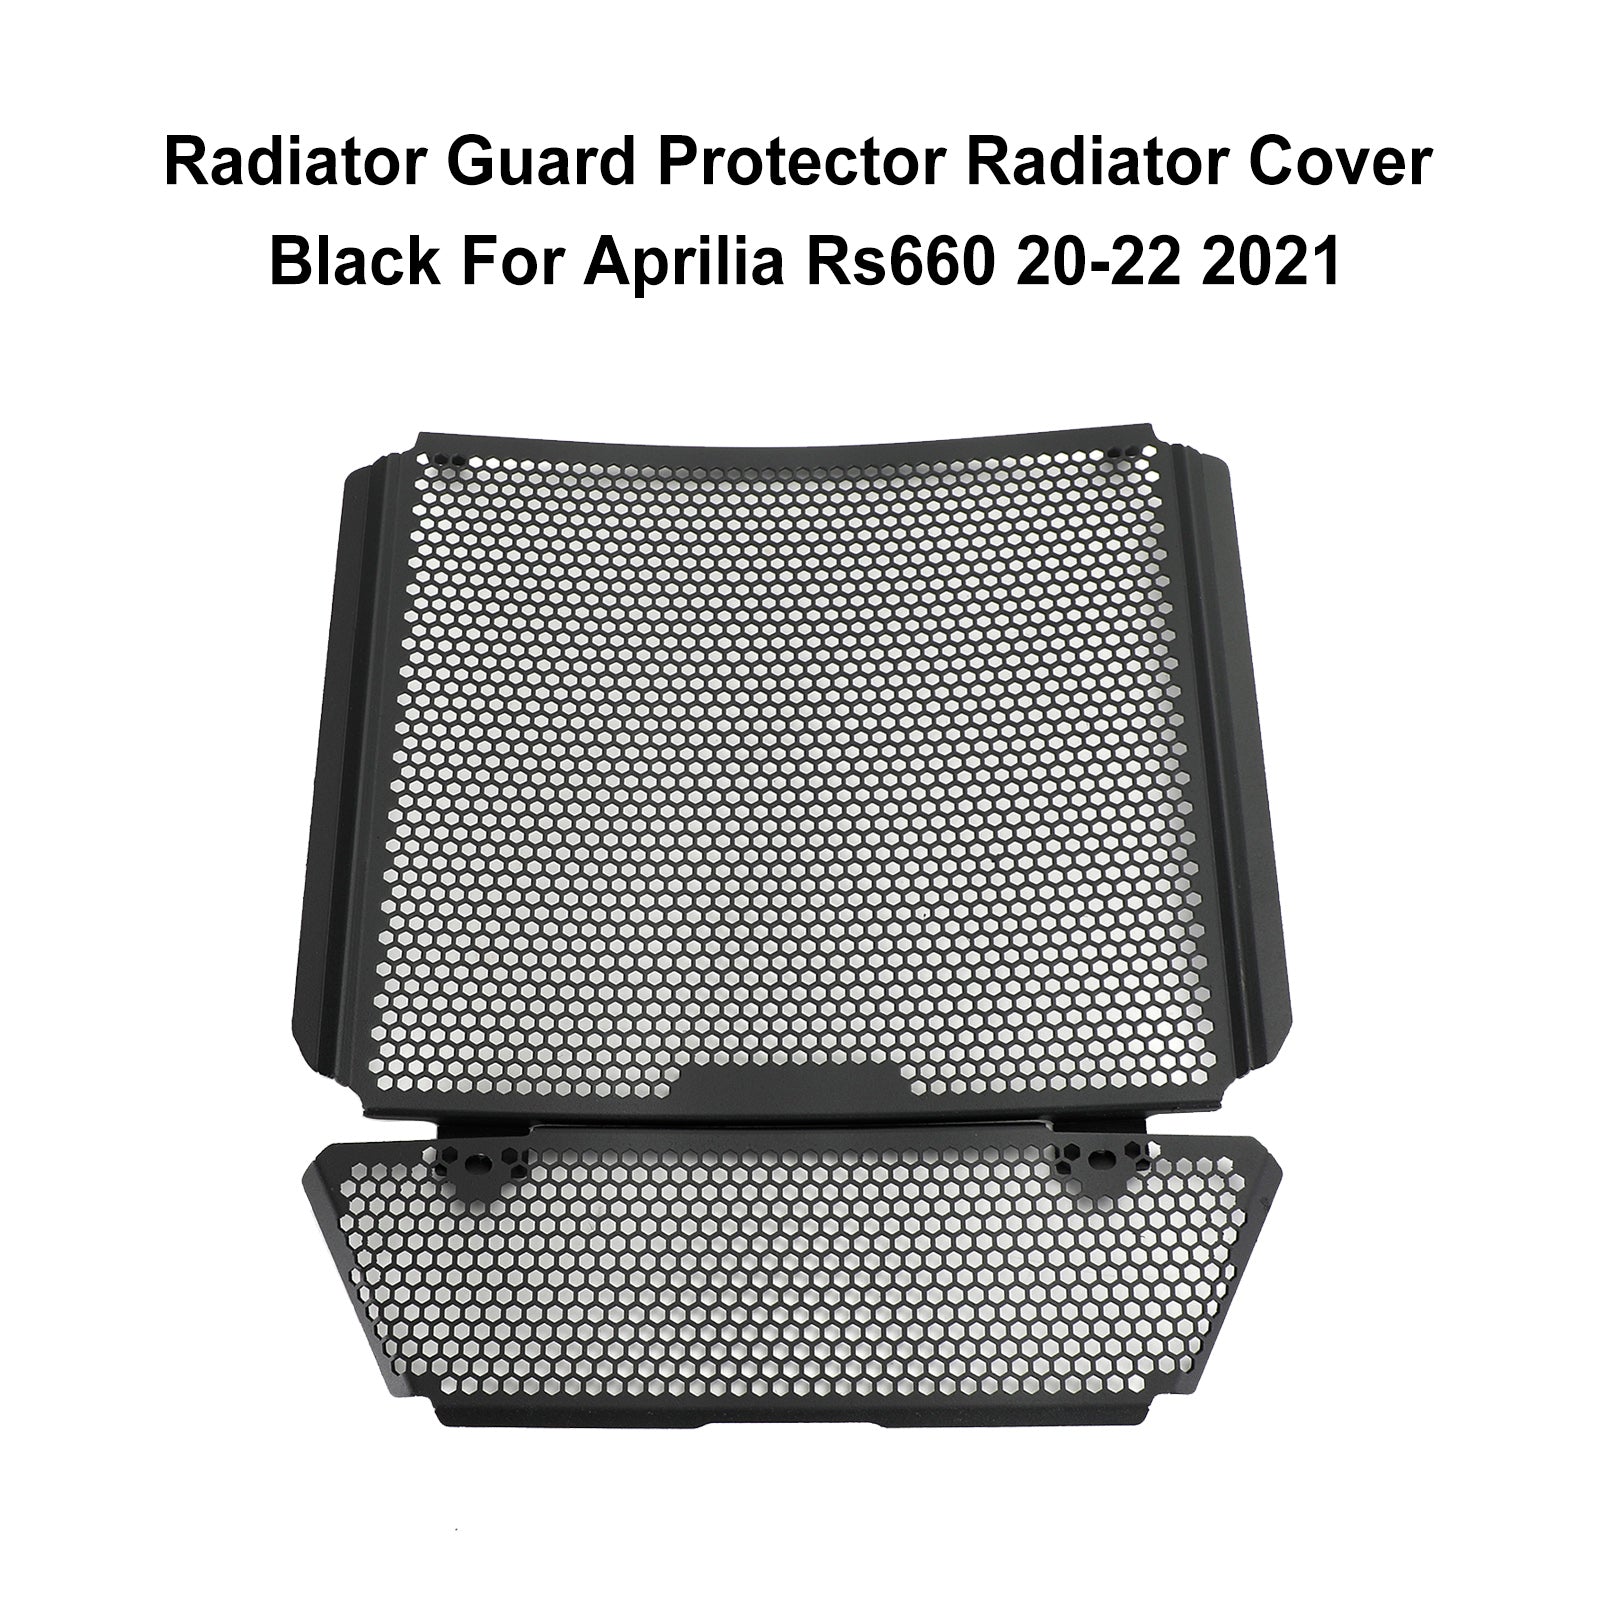 Radiator Guard Cover Radiator Protector Black For Aprilia Rs660 20-22 2021 Generic